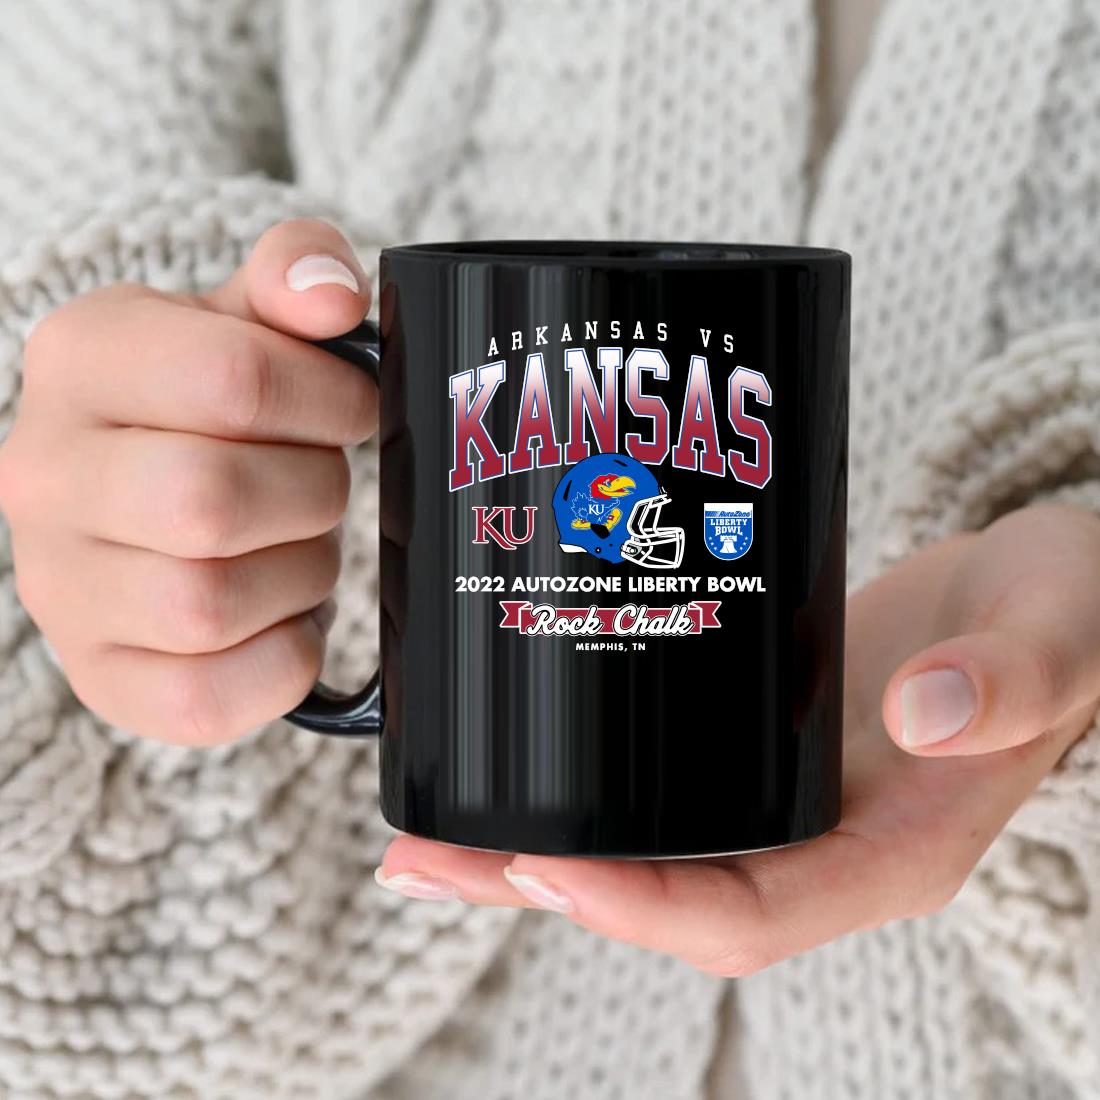 Arkansas Razorbacks Vs Kansas Jayhawks 2022 Autozone Liberty Bowl Rock Chalk Mug